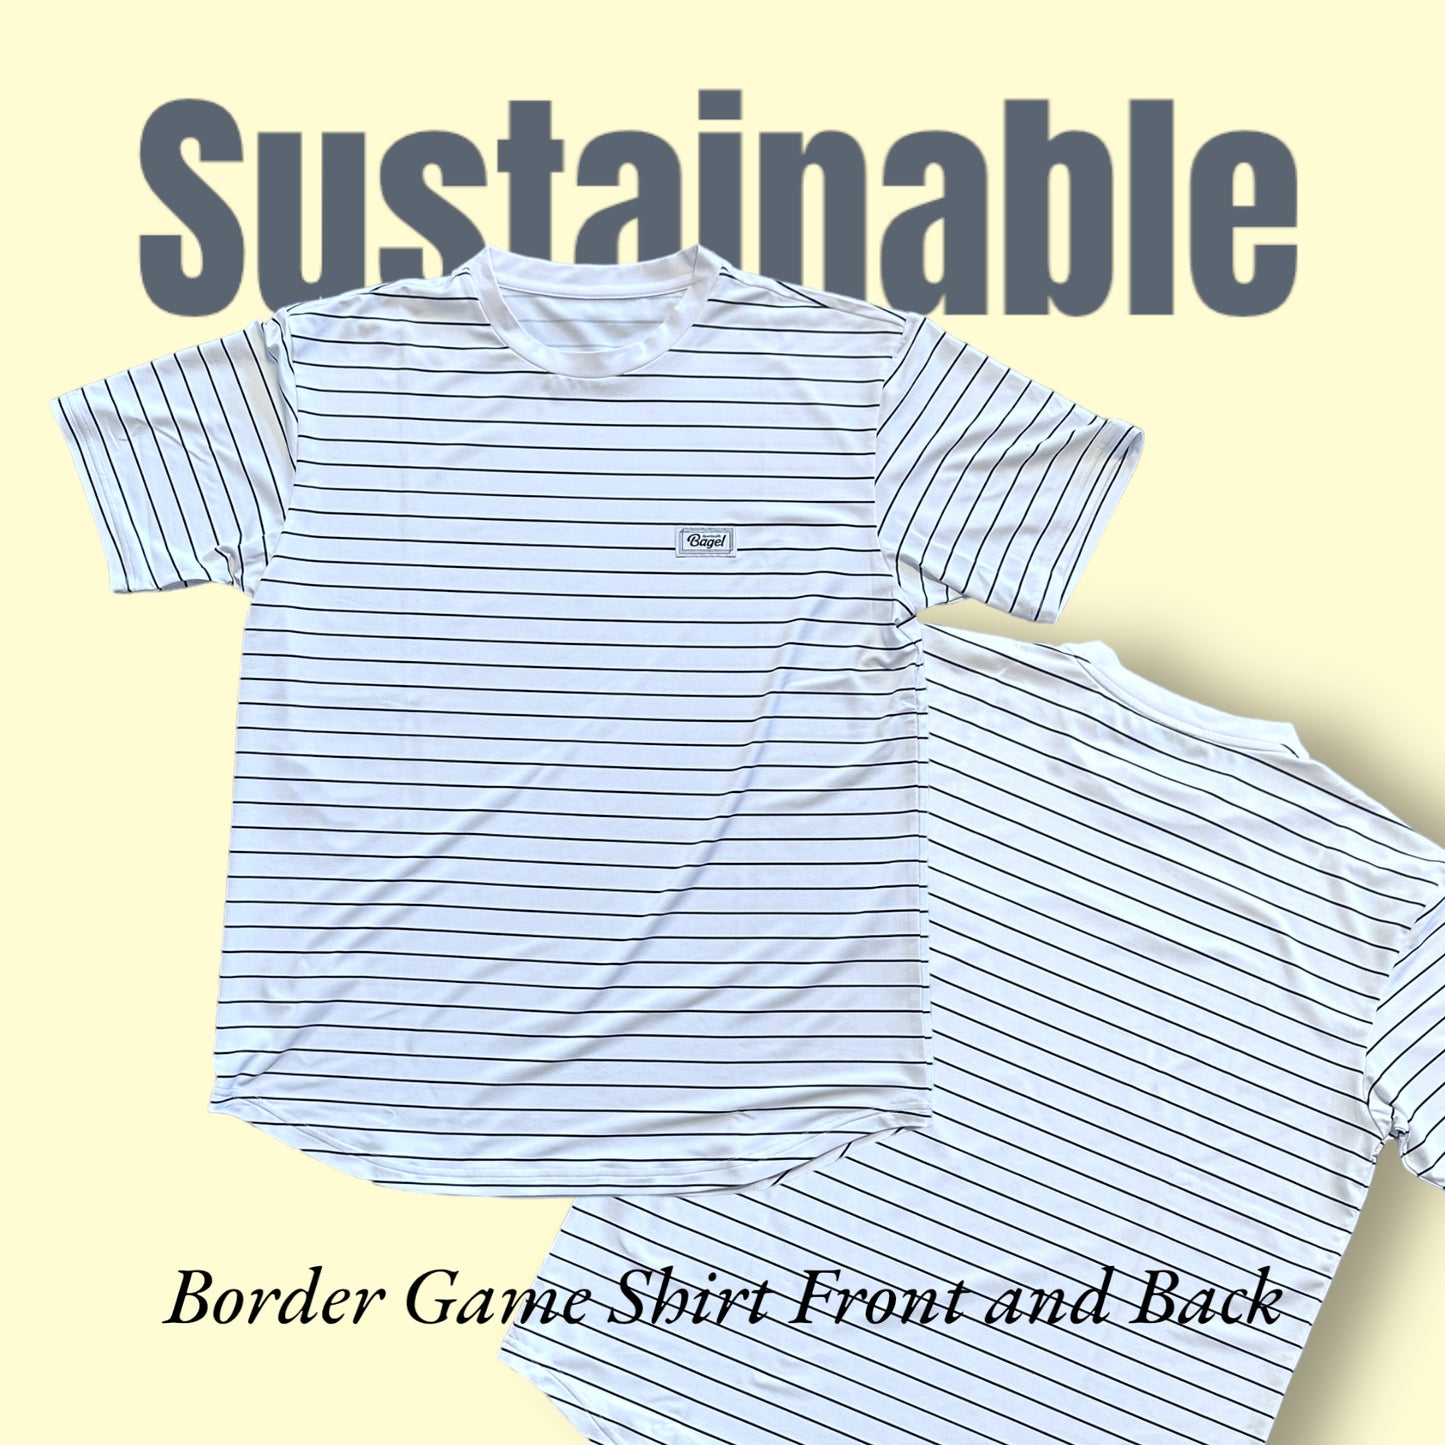 MENS Sustainable BorderFB Game Shirt White